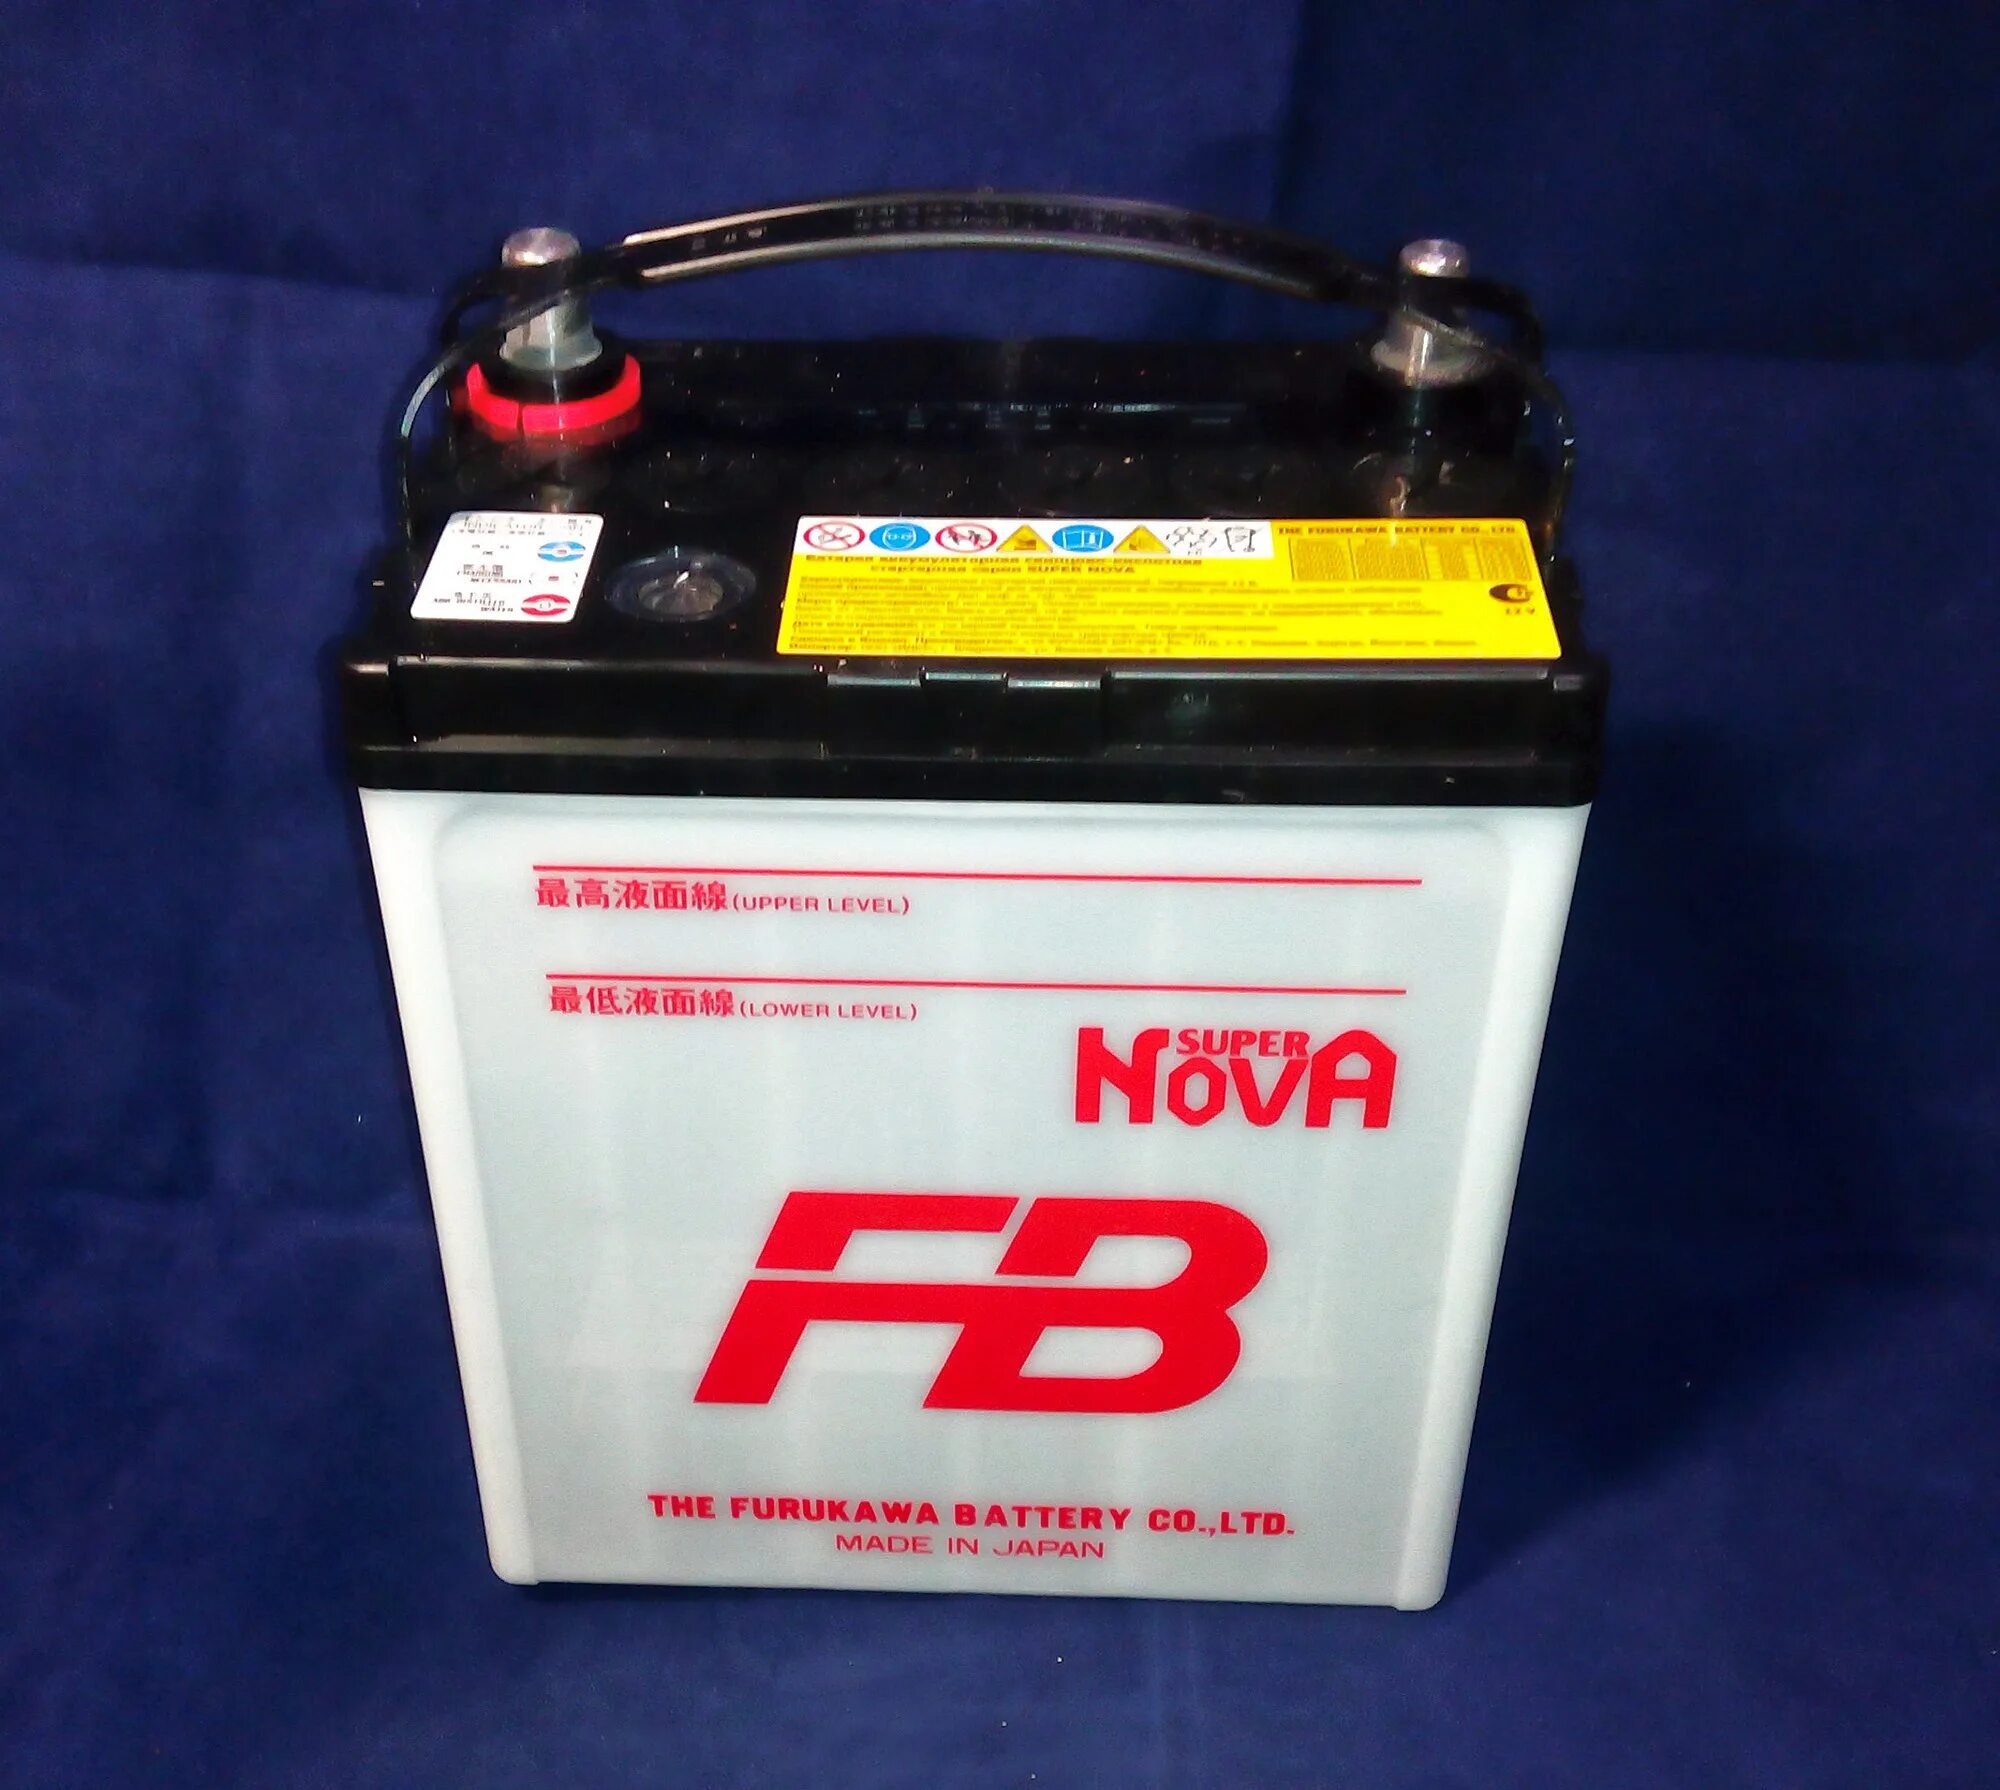 Nova battery. Furukawa Battery fb super Nova 40b19l. Furukawa аккумулятор fb super Nova. Аккумулятор Furukawa 40b19l. Furukawa battery40b19lбатарея аккумуляторная "fb super Nova", 12в 38а/ч.